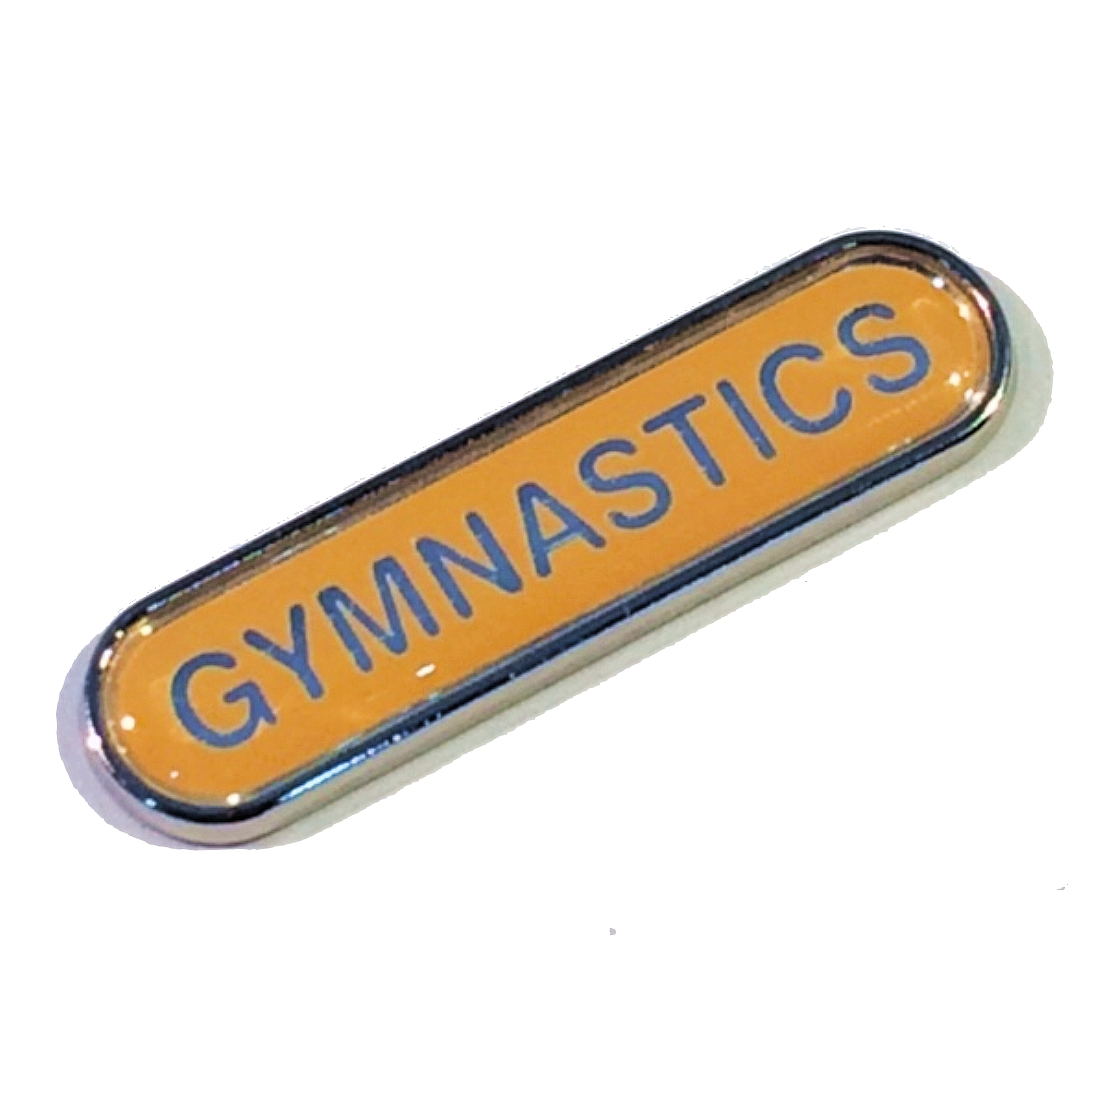 GYMNASTICS bar badge